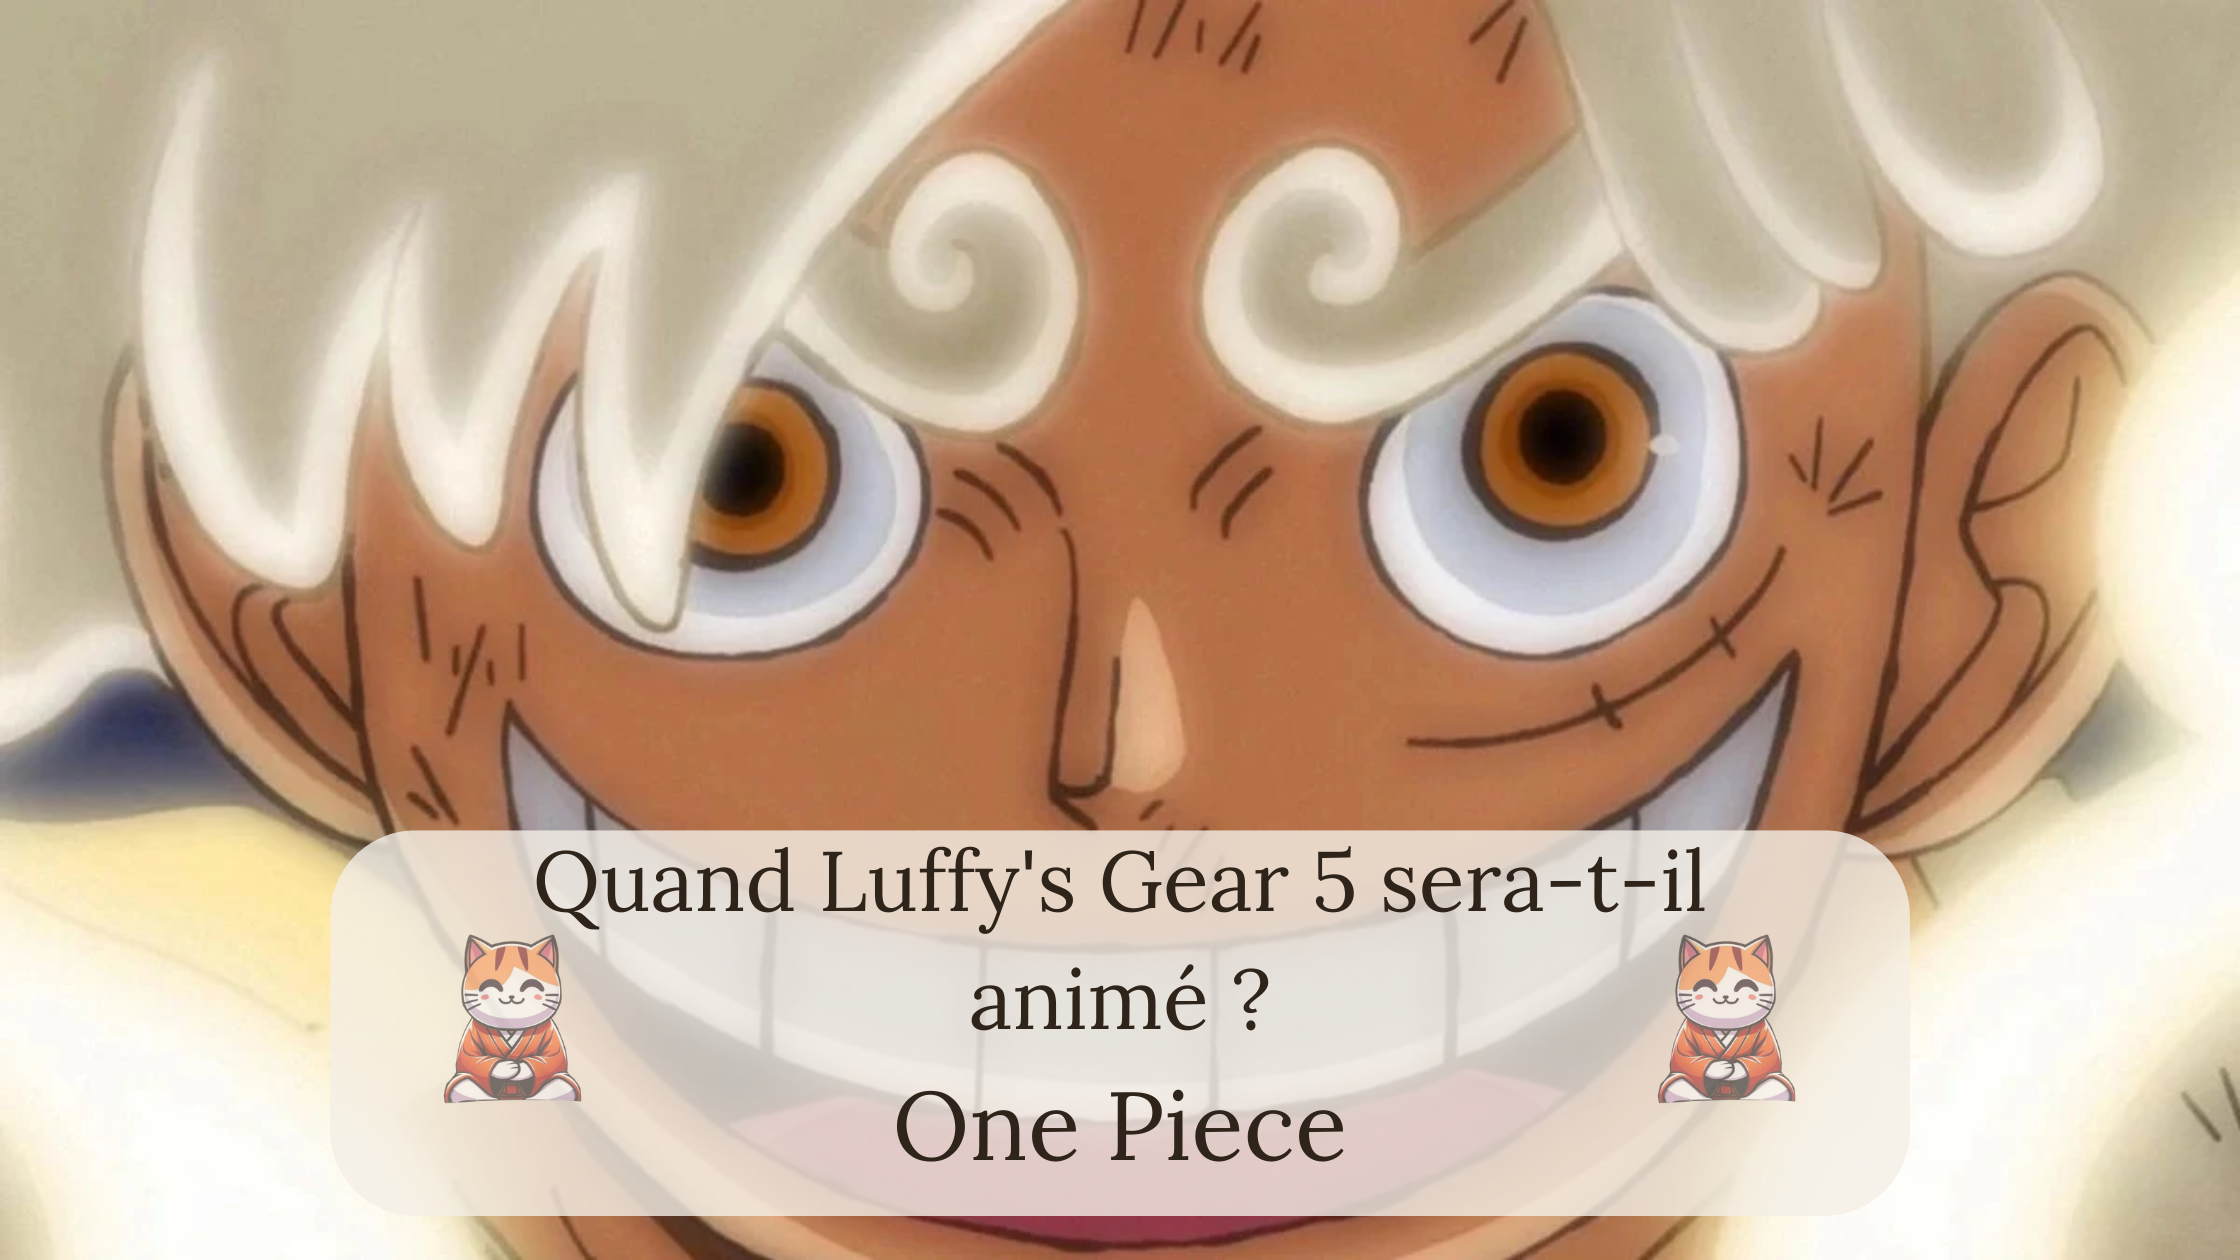 Quand Luffy's Gear 5 sera-t-il animé ?